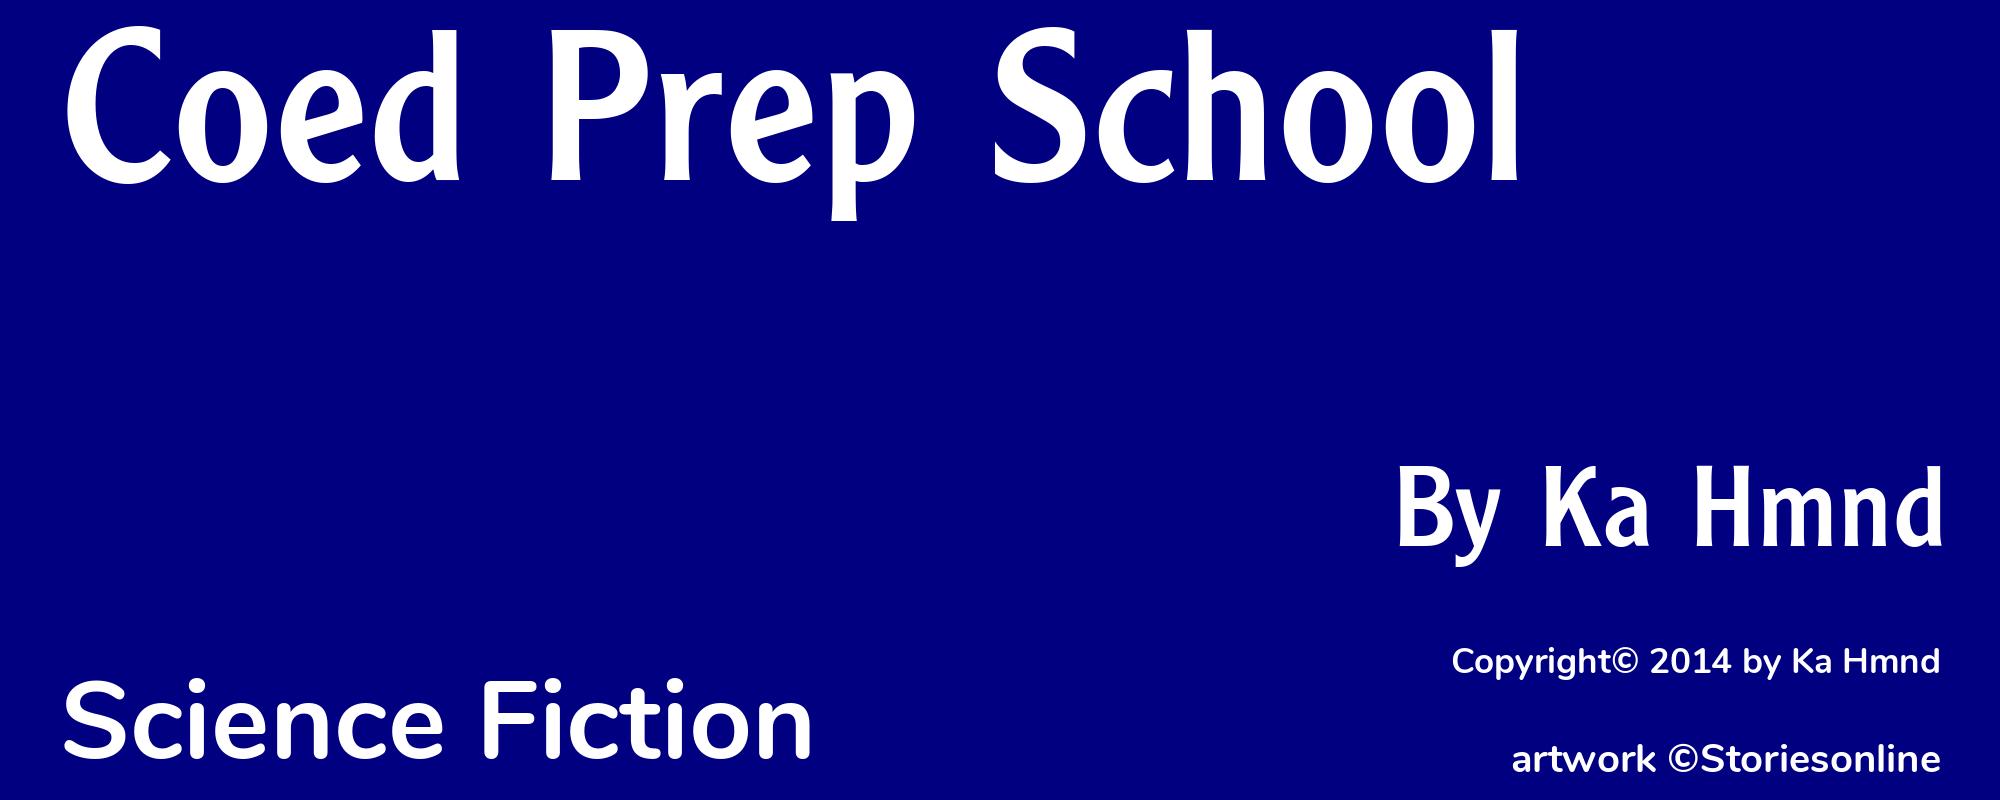 Coed Prep School - Cover